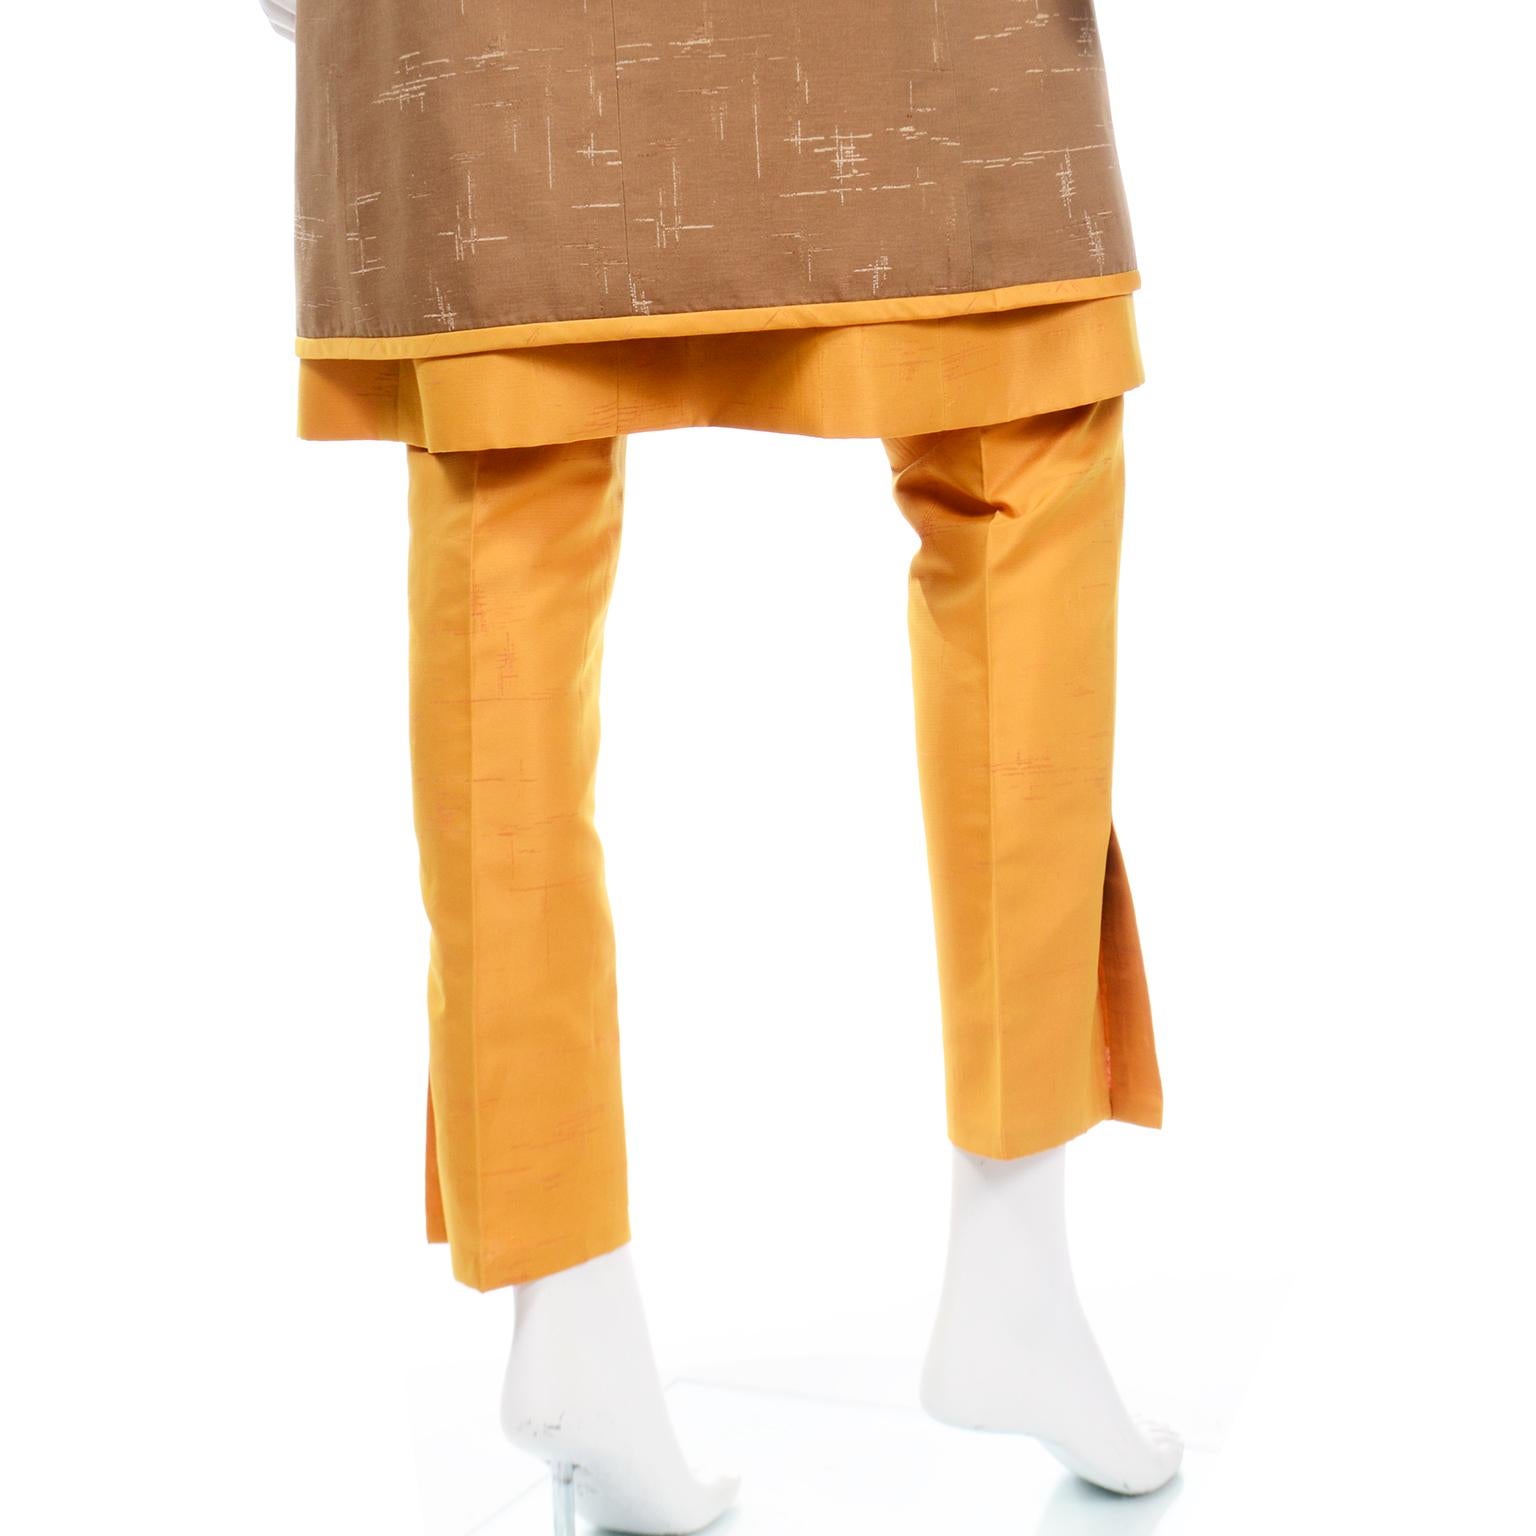 Oscar de la Renta 1990s Vintage 1960s inspired Coat Pants and Dress Outfit For Sale 10